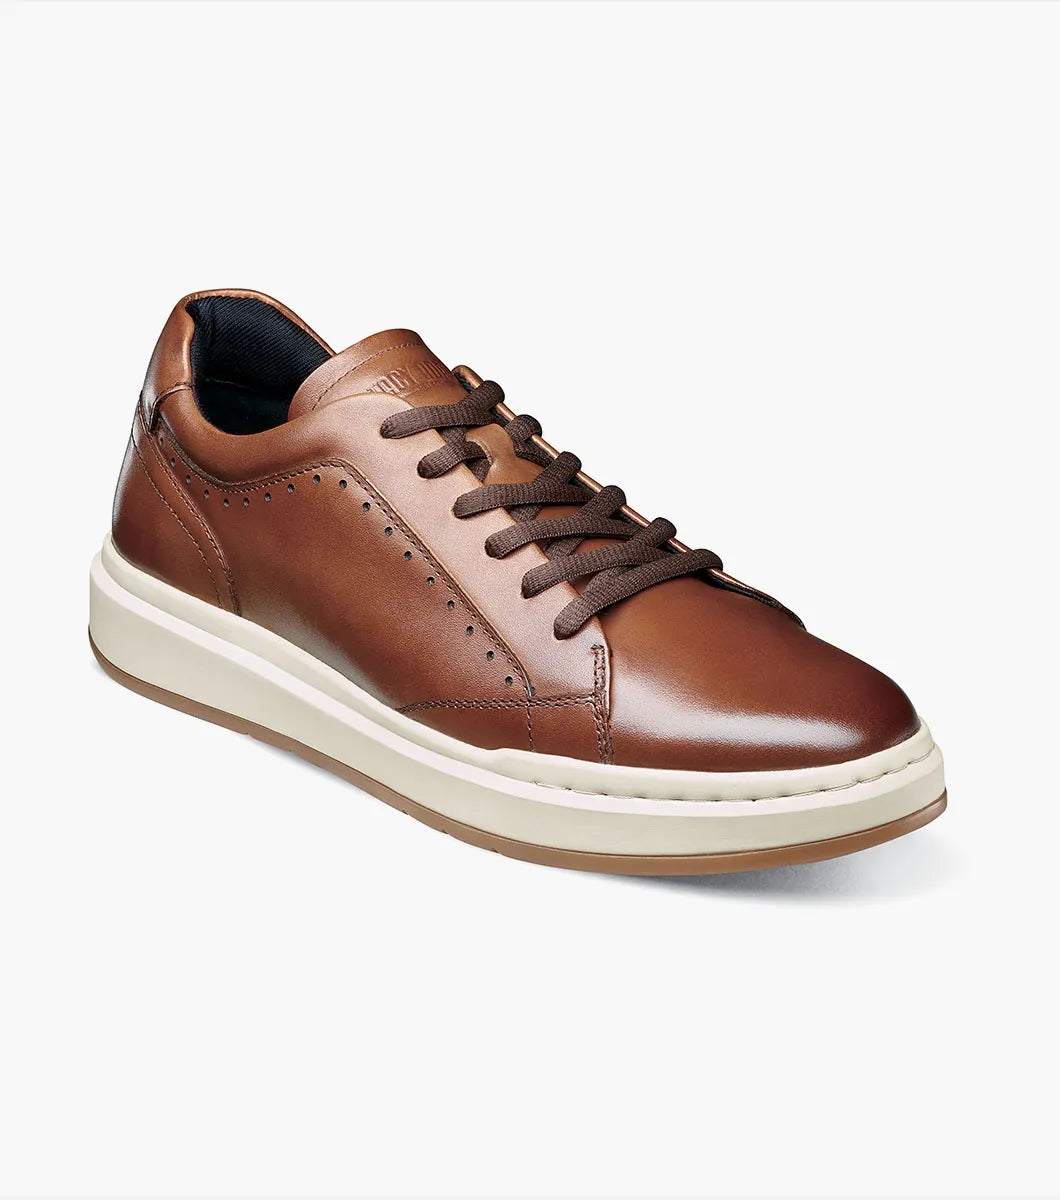 Currier Moc Toe Lace Up Sneaker Men's Casual Shoes | Stacyadams.com